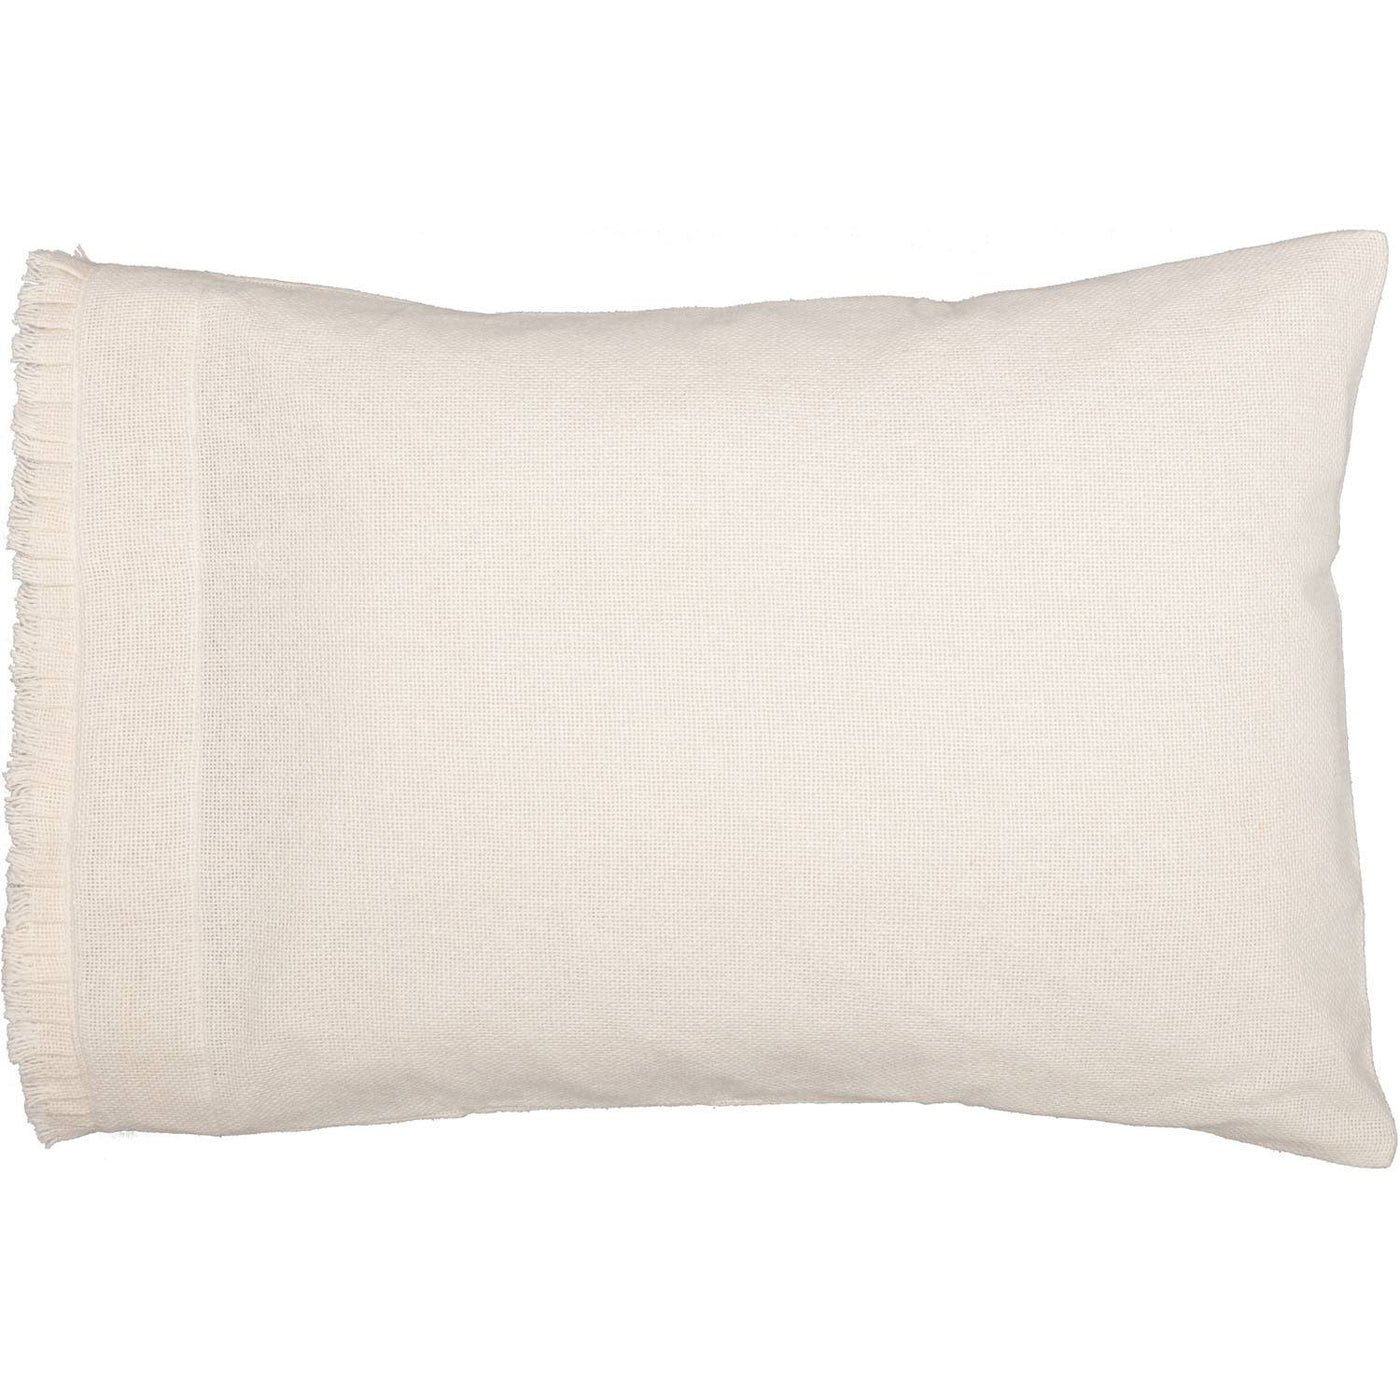 Athol Standard Ruffled Pillow Case - White - Set of 2